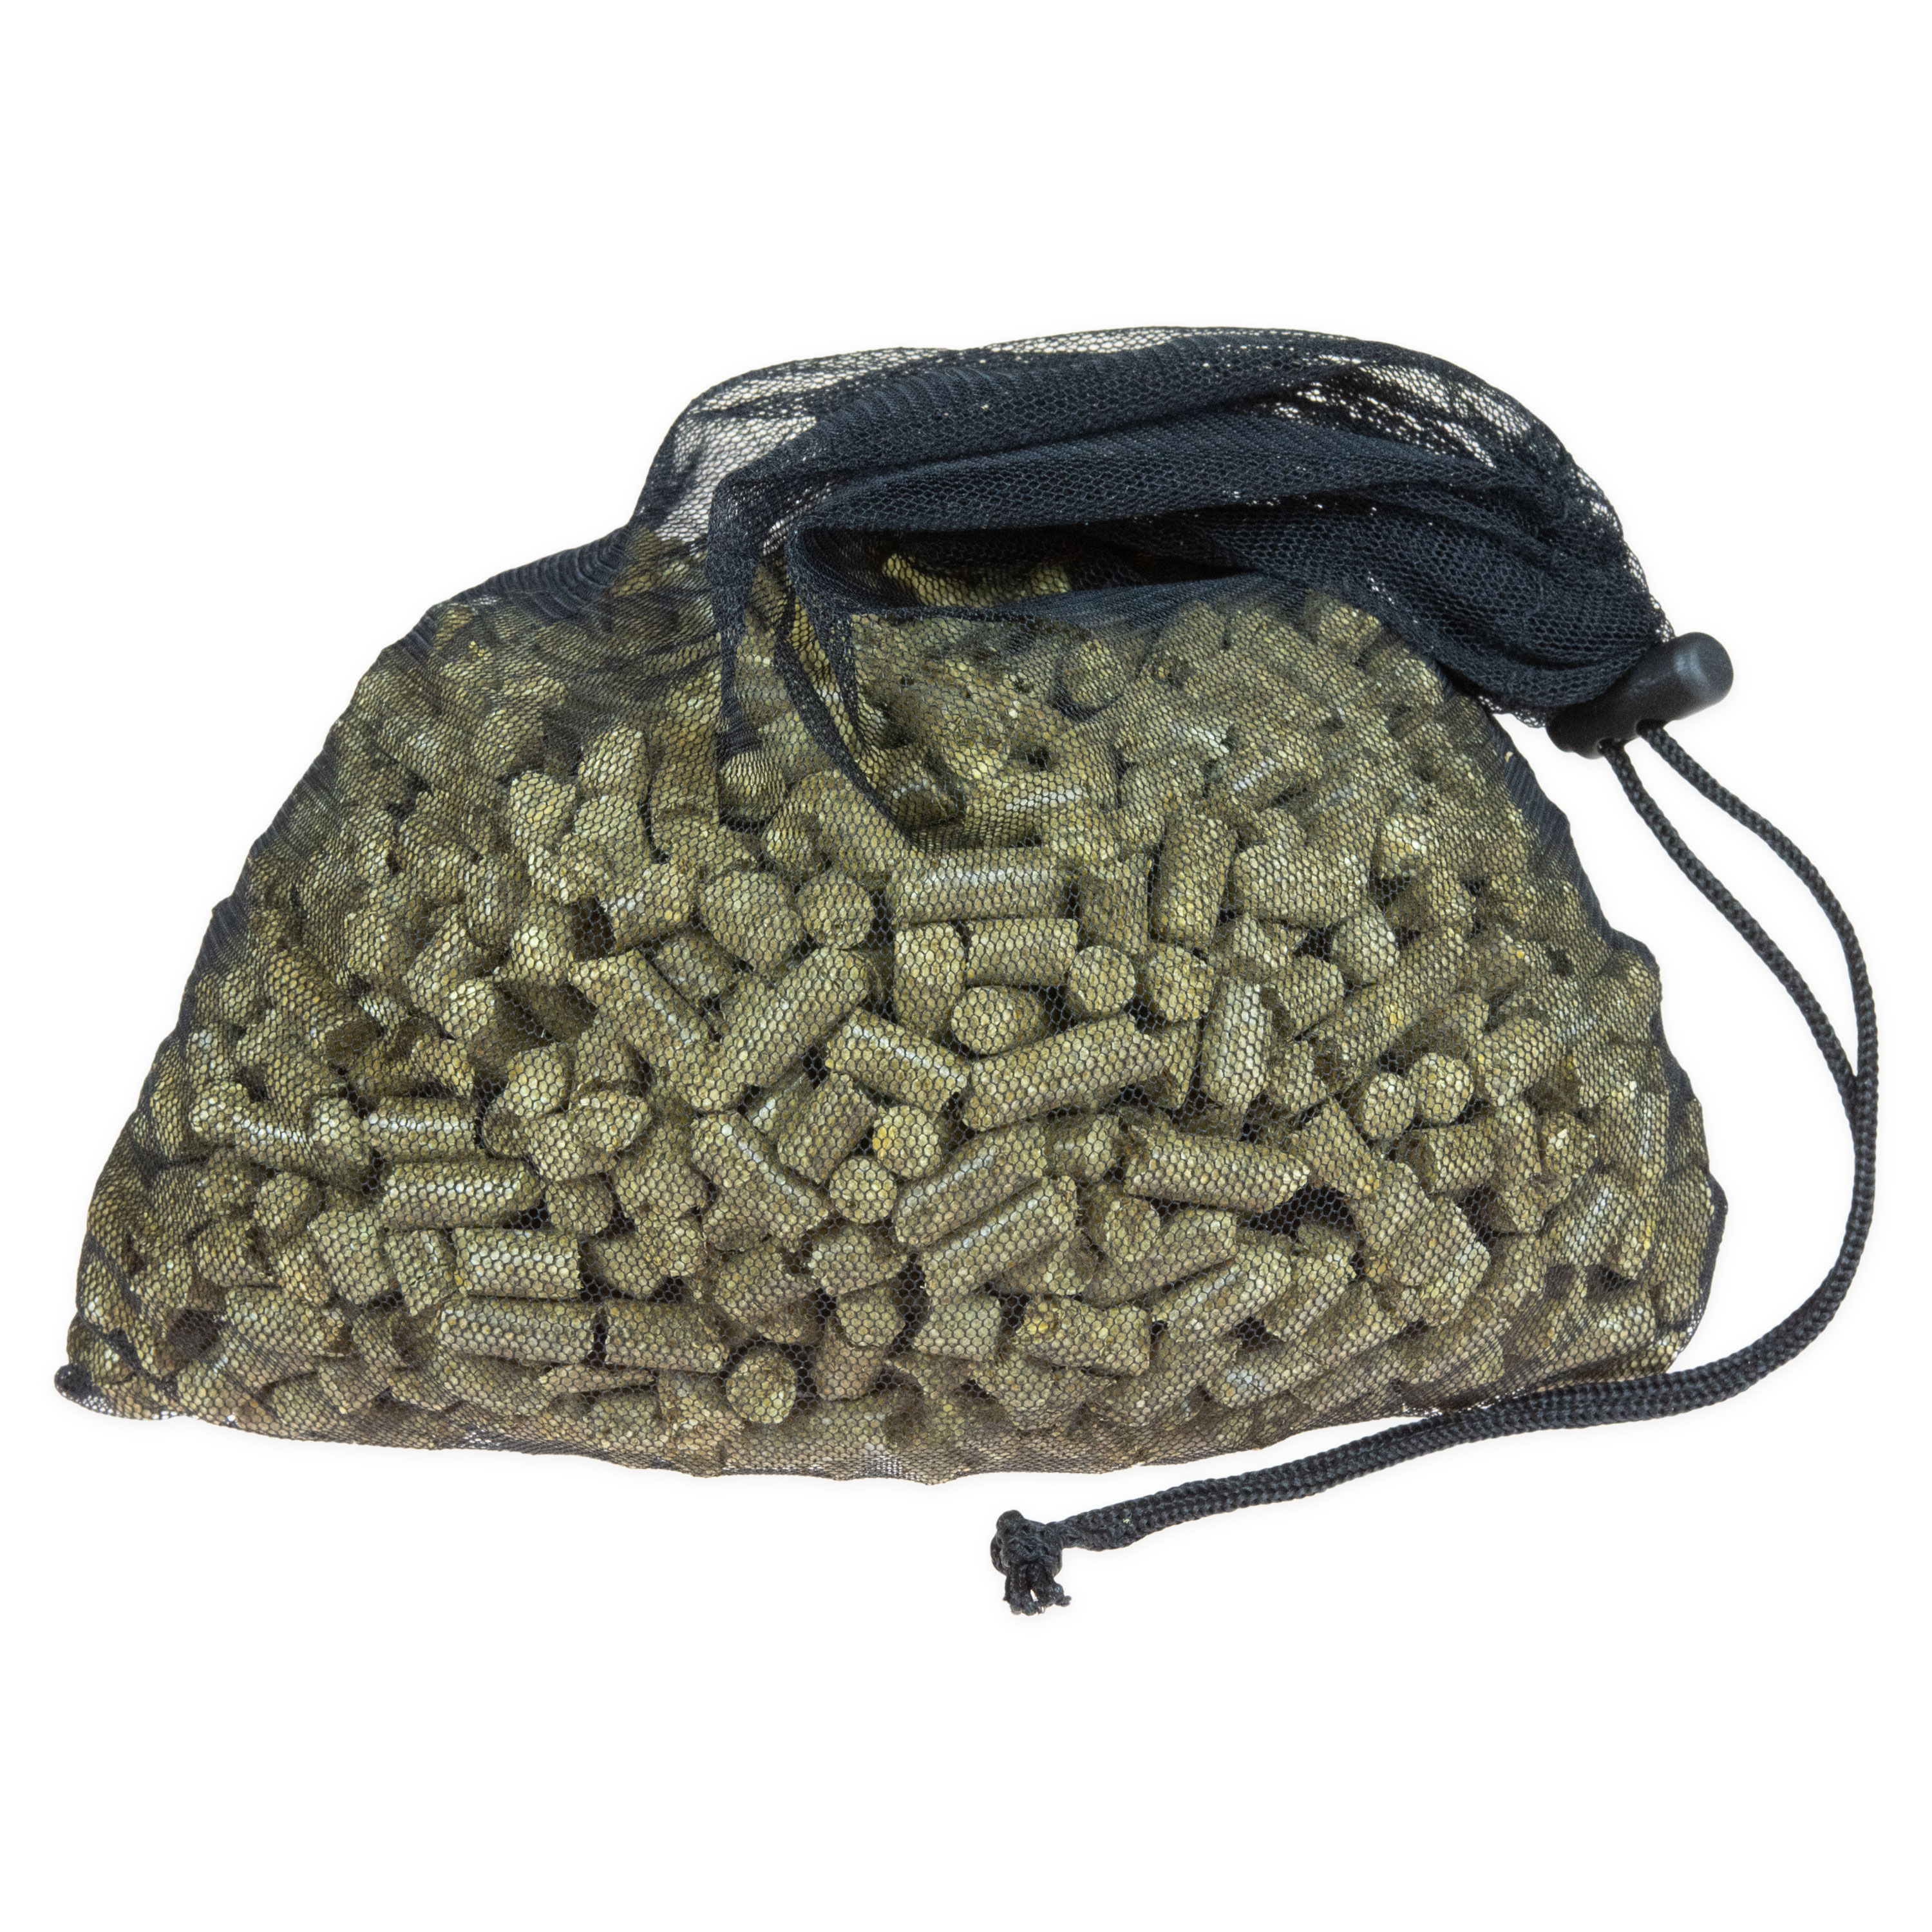 Barley straw pellets in drawstring bag 1 litre